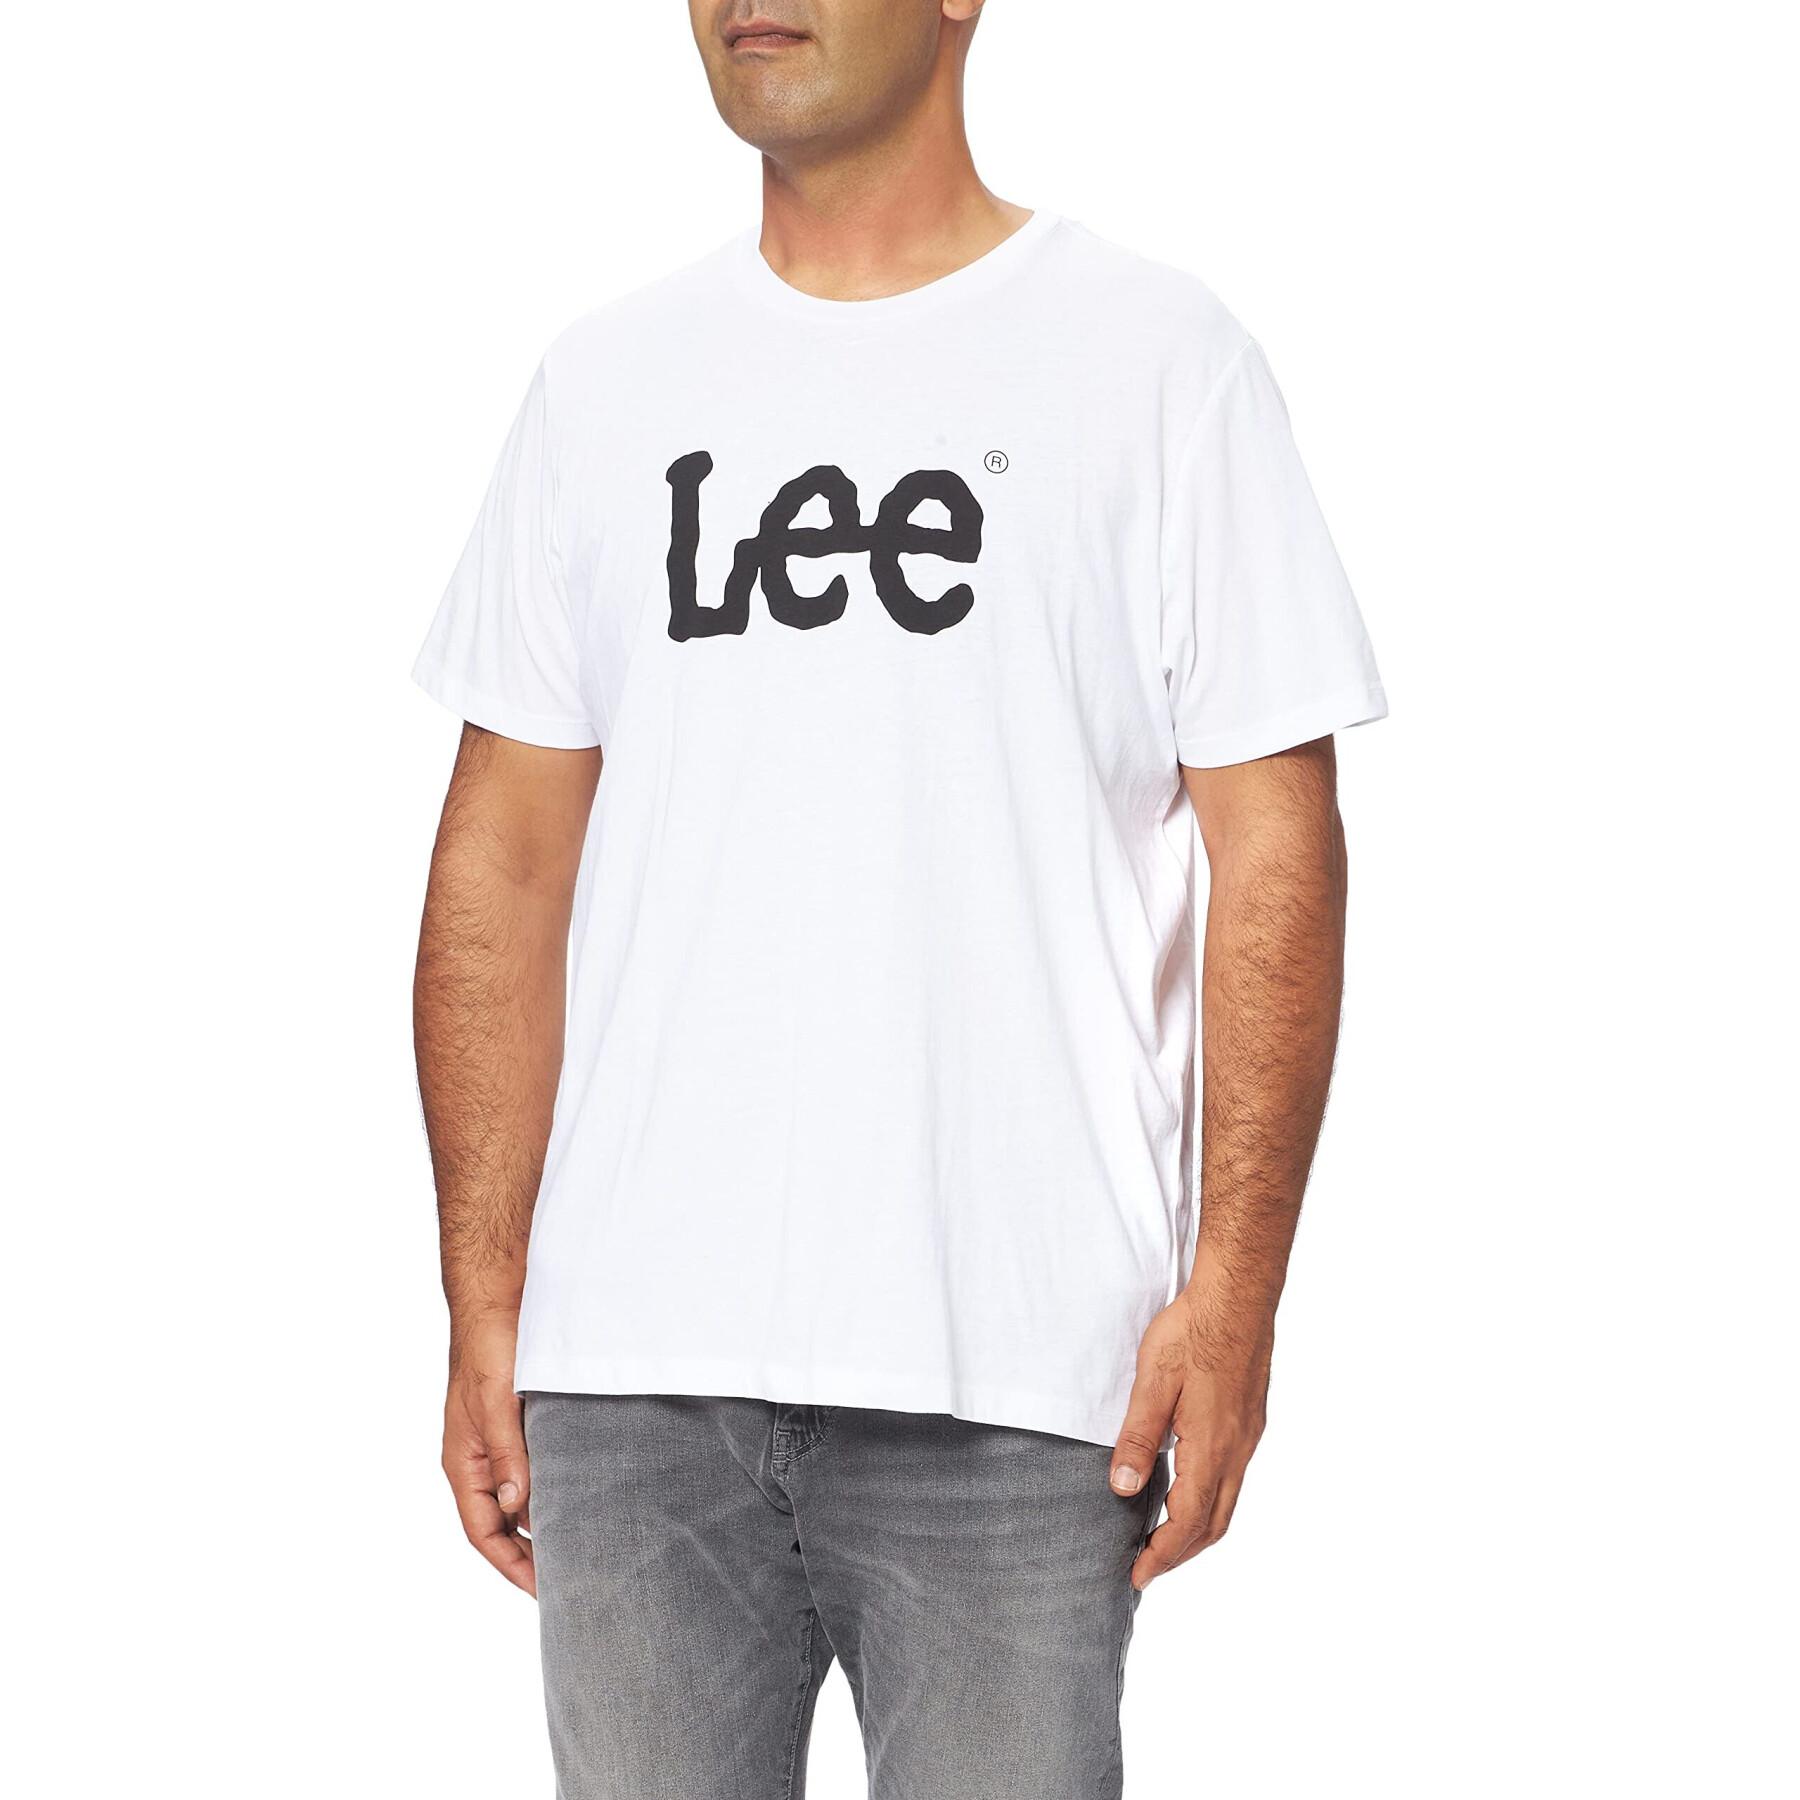 T-Shirt Lee Logo